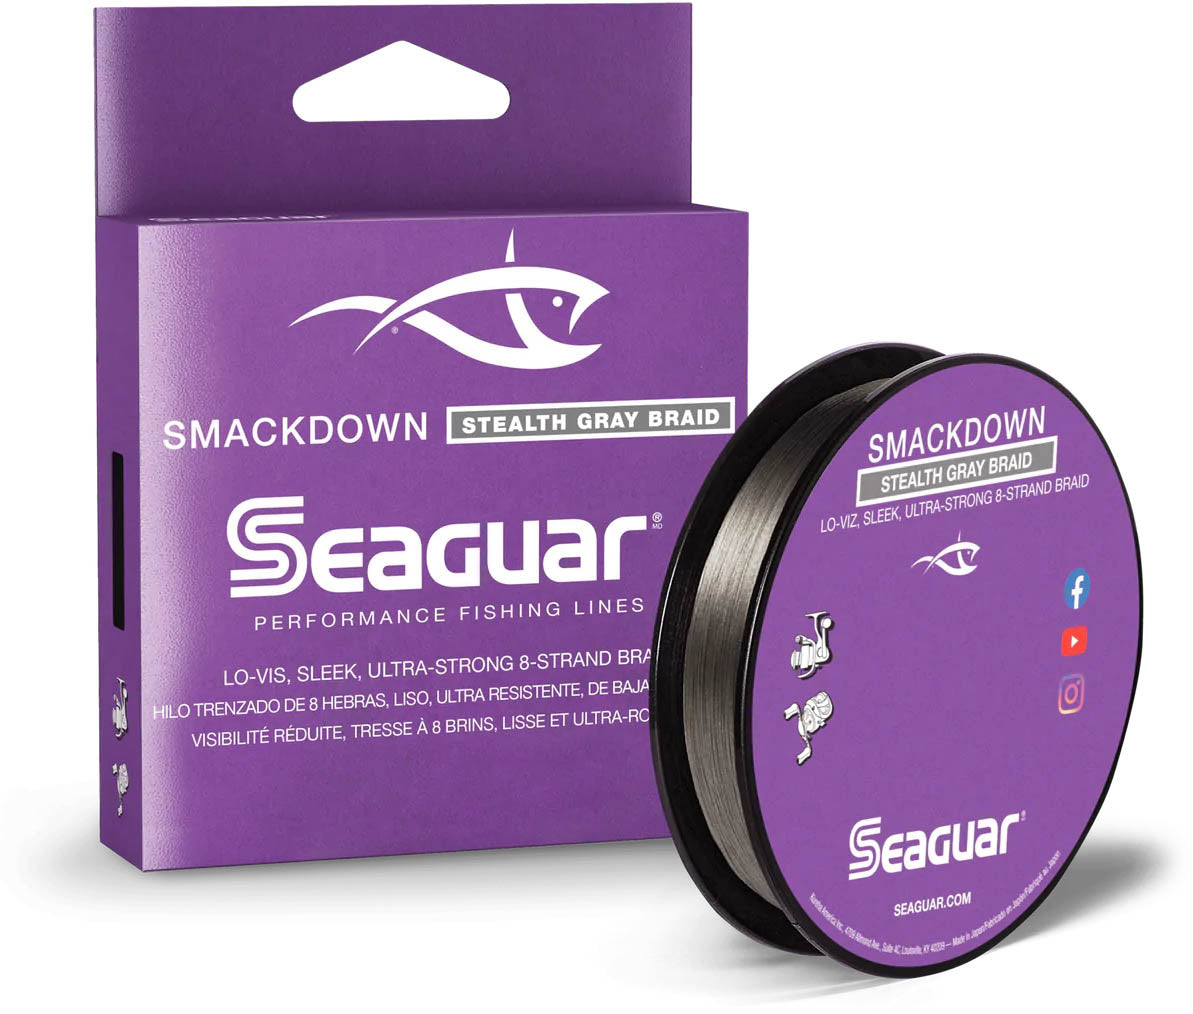 Seaguar Smackdown Stealth Gray Braid Fishing Line, 300 Yards, 65 lbs